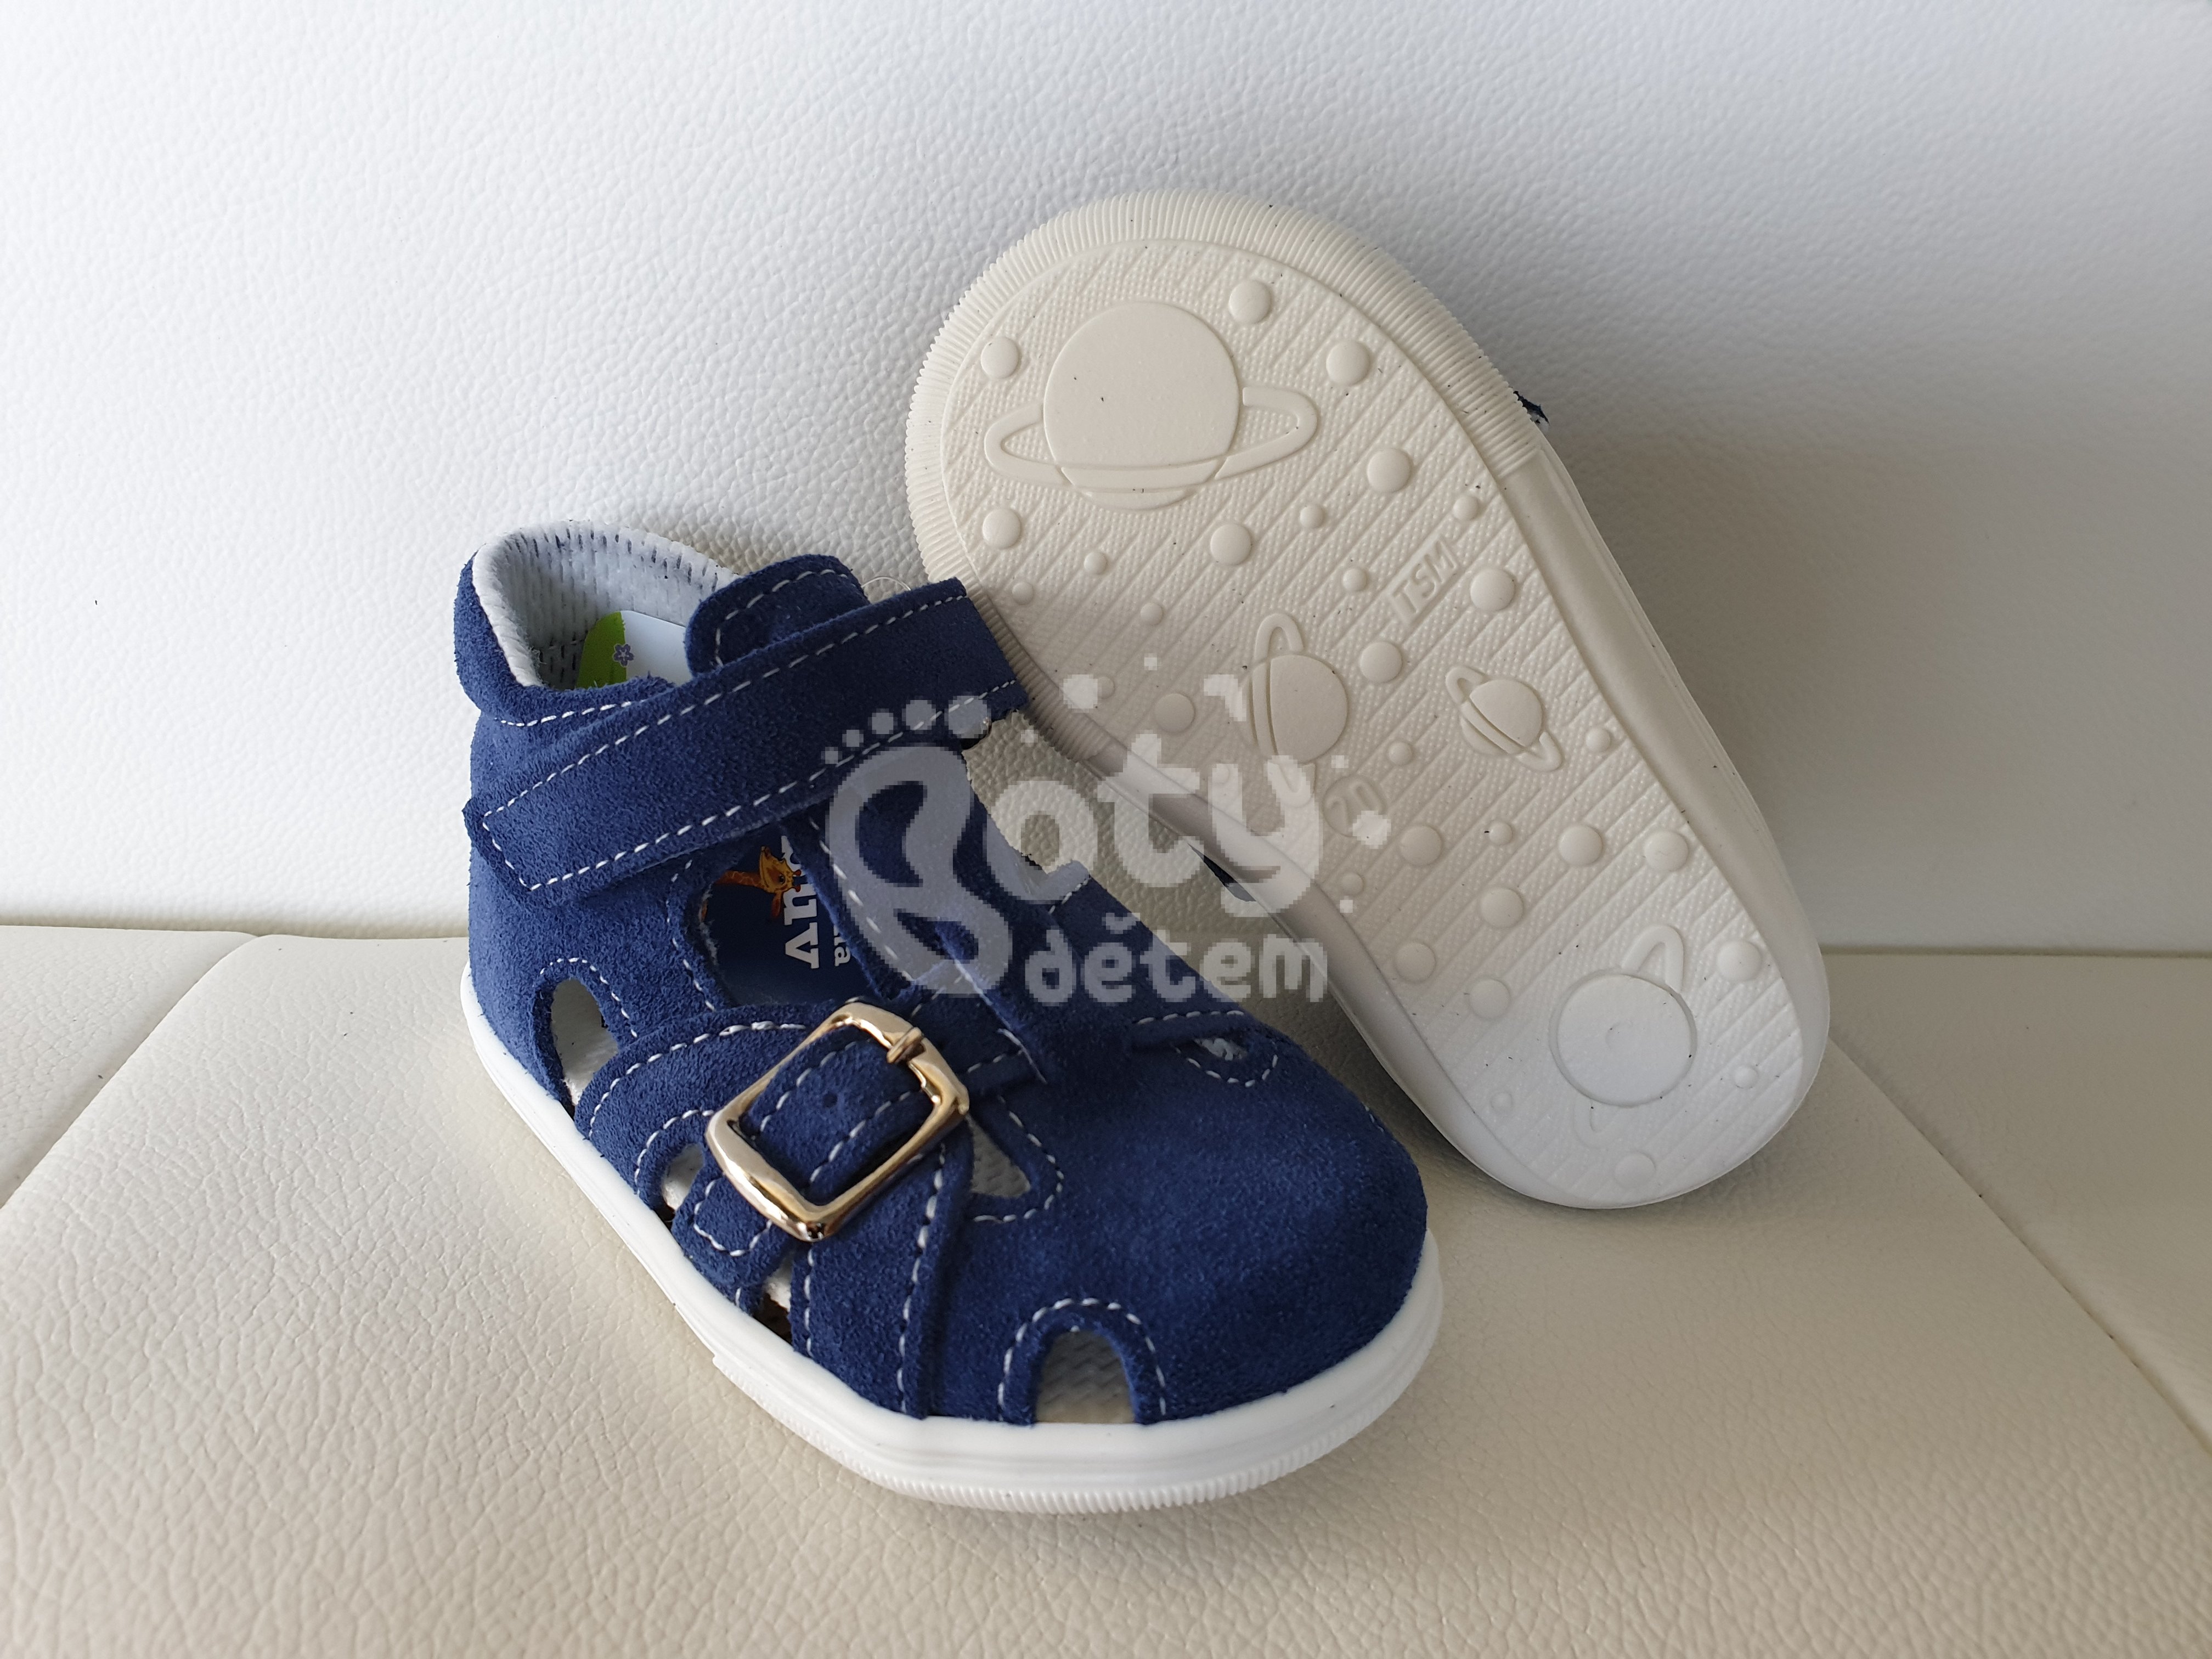 Jonap kožené sandálky 009 S modrá